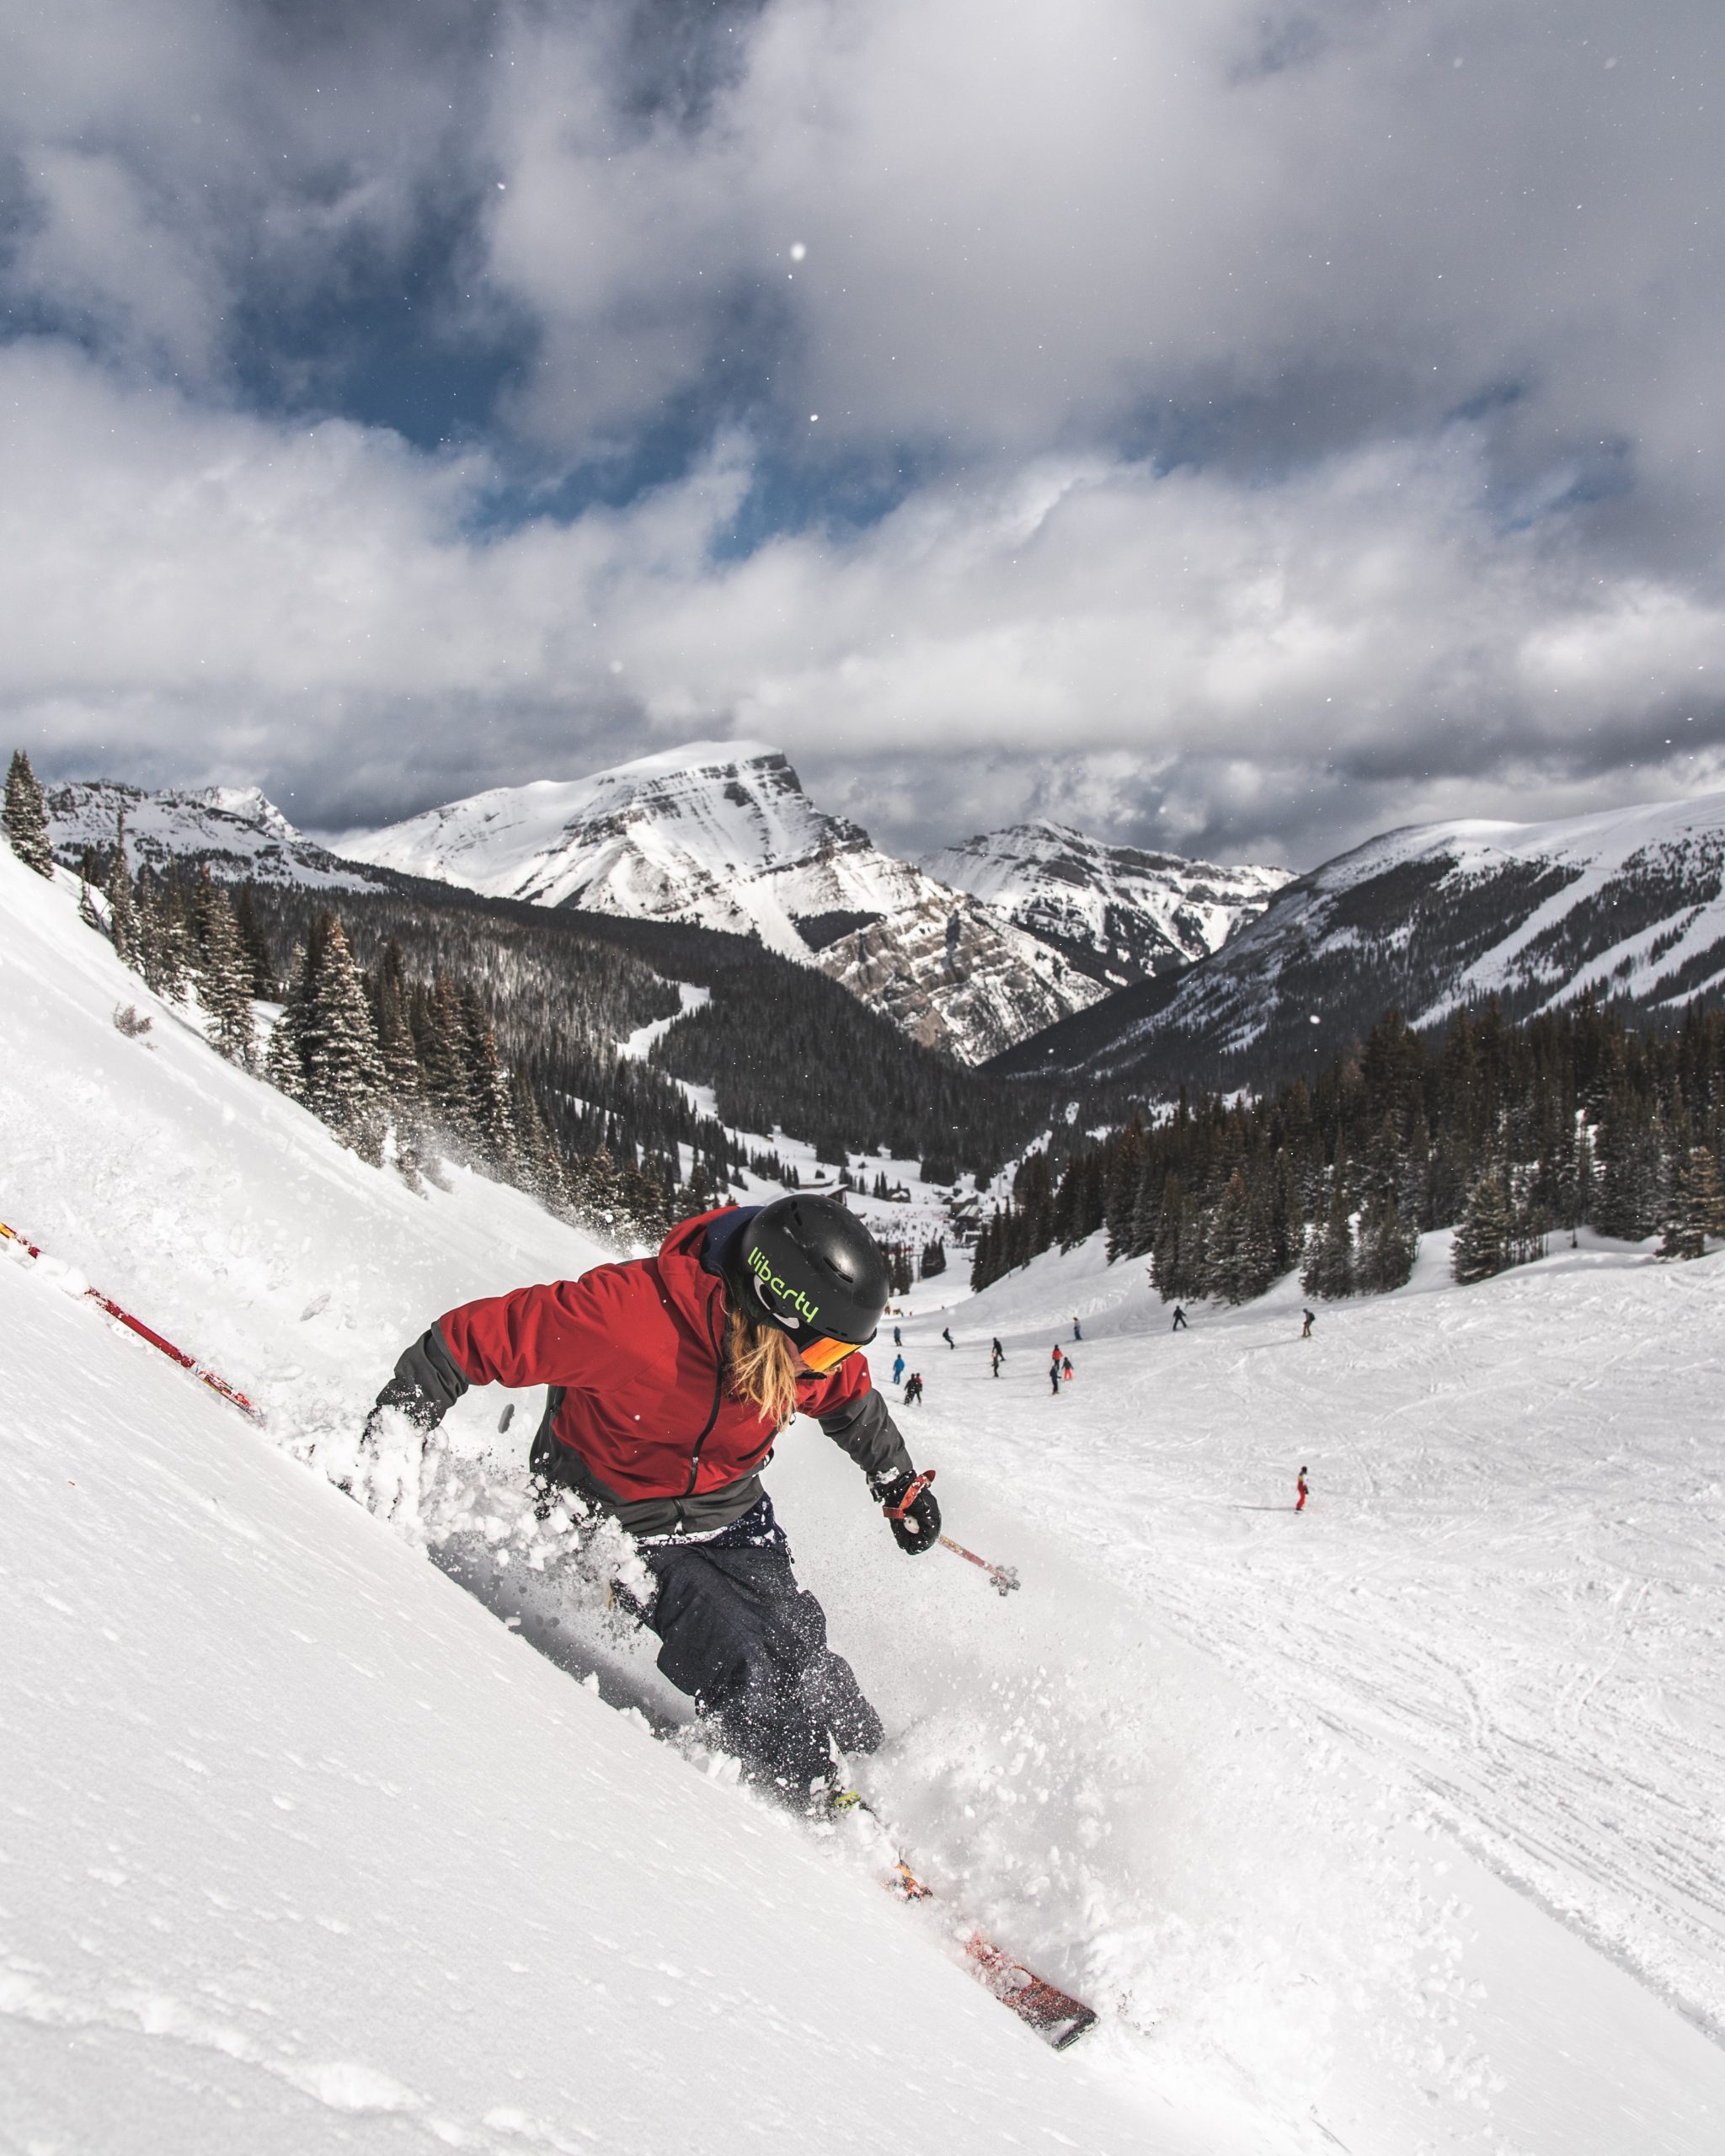 The Snowbowl Ski Resort